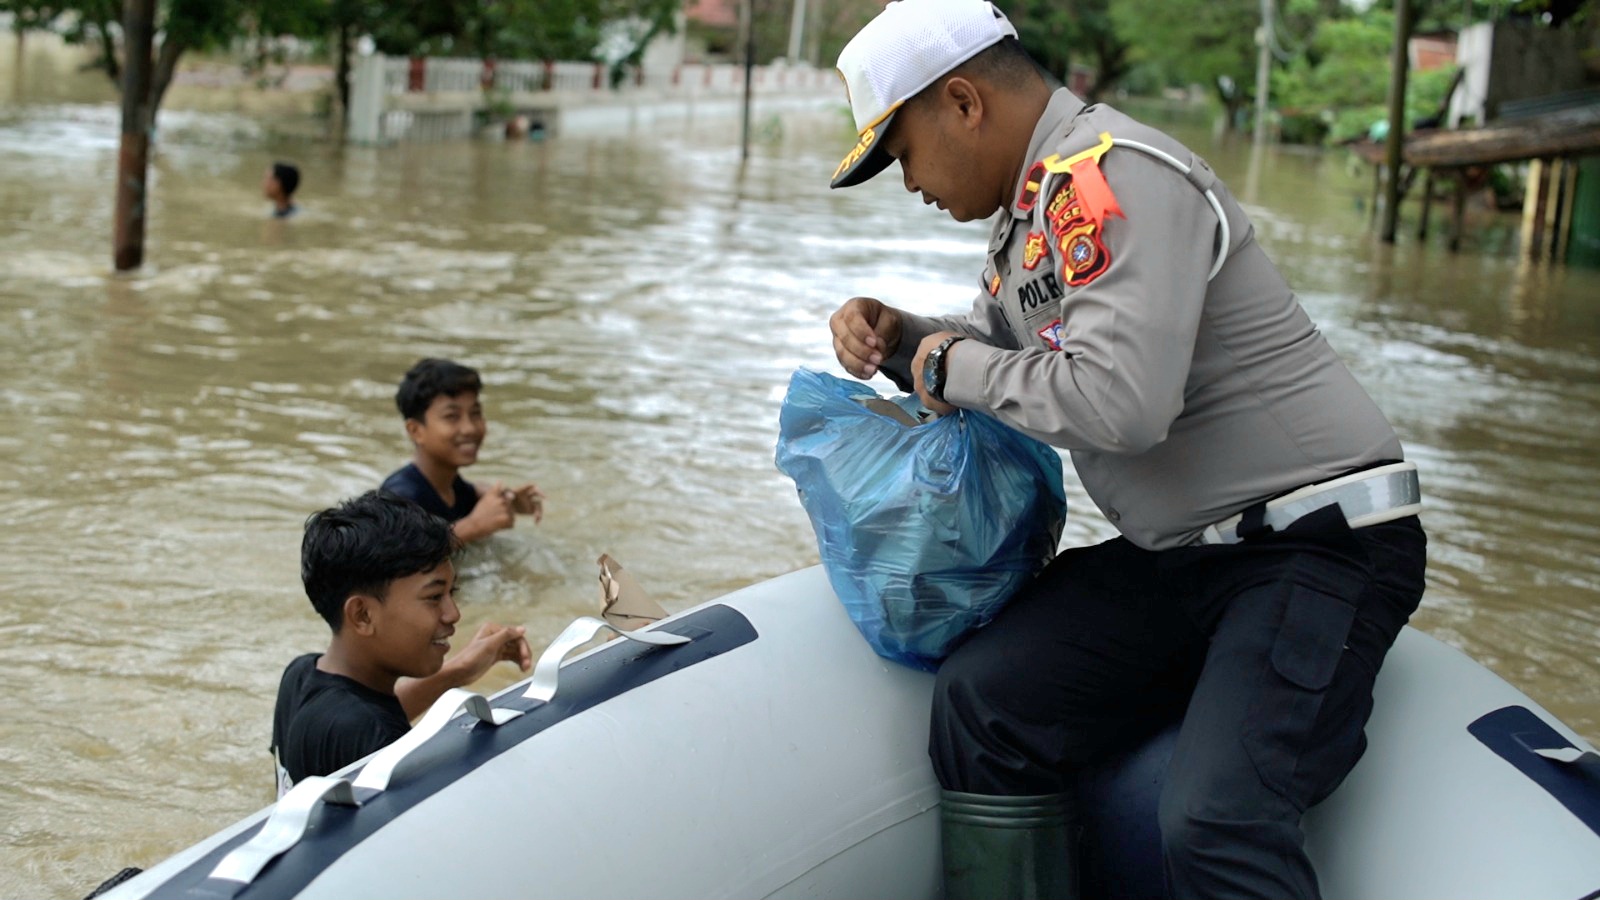 Anggota Satuan Lalu Lintas Polres Aceh Utara Berikan Bantuan Makanan kepada Korban Banjir